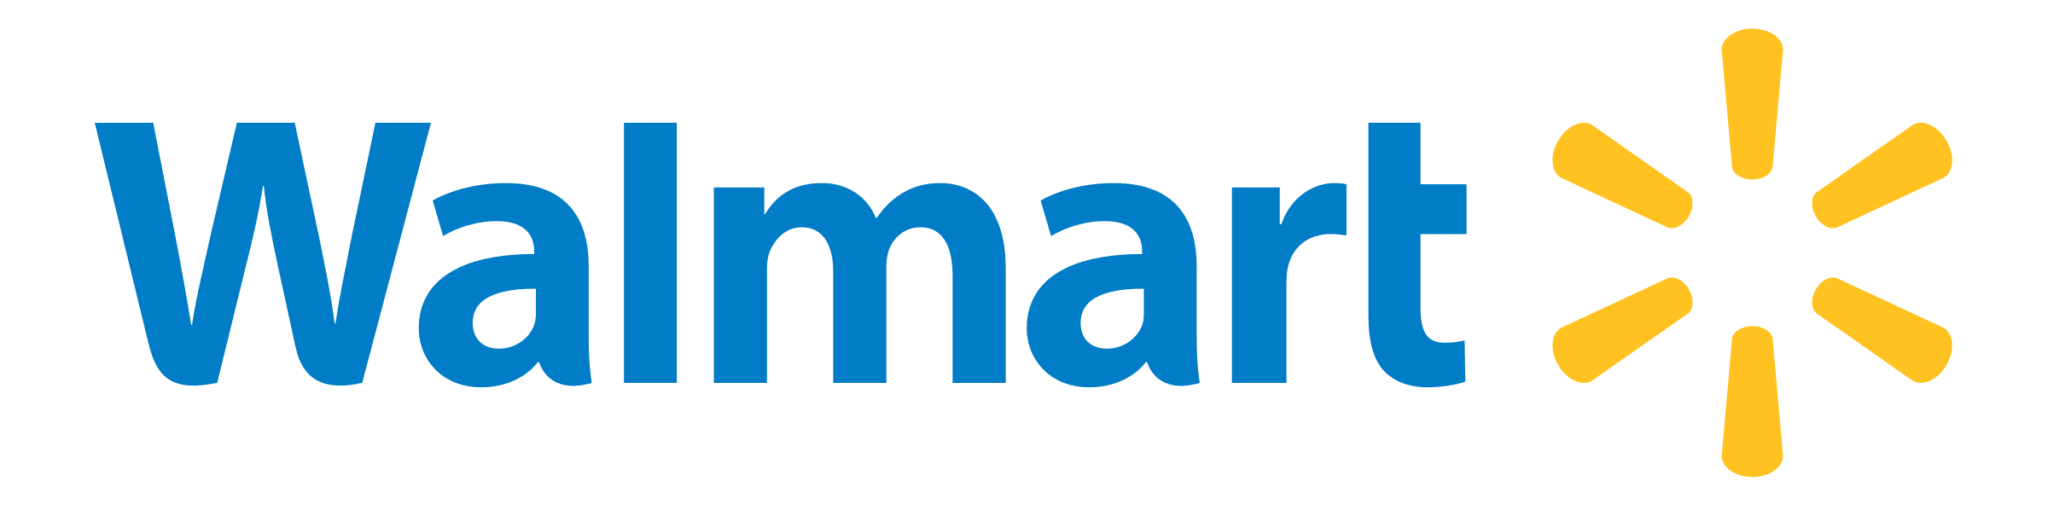 1718-walmart-logo-transparent-16854800450247.png